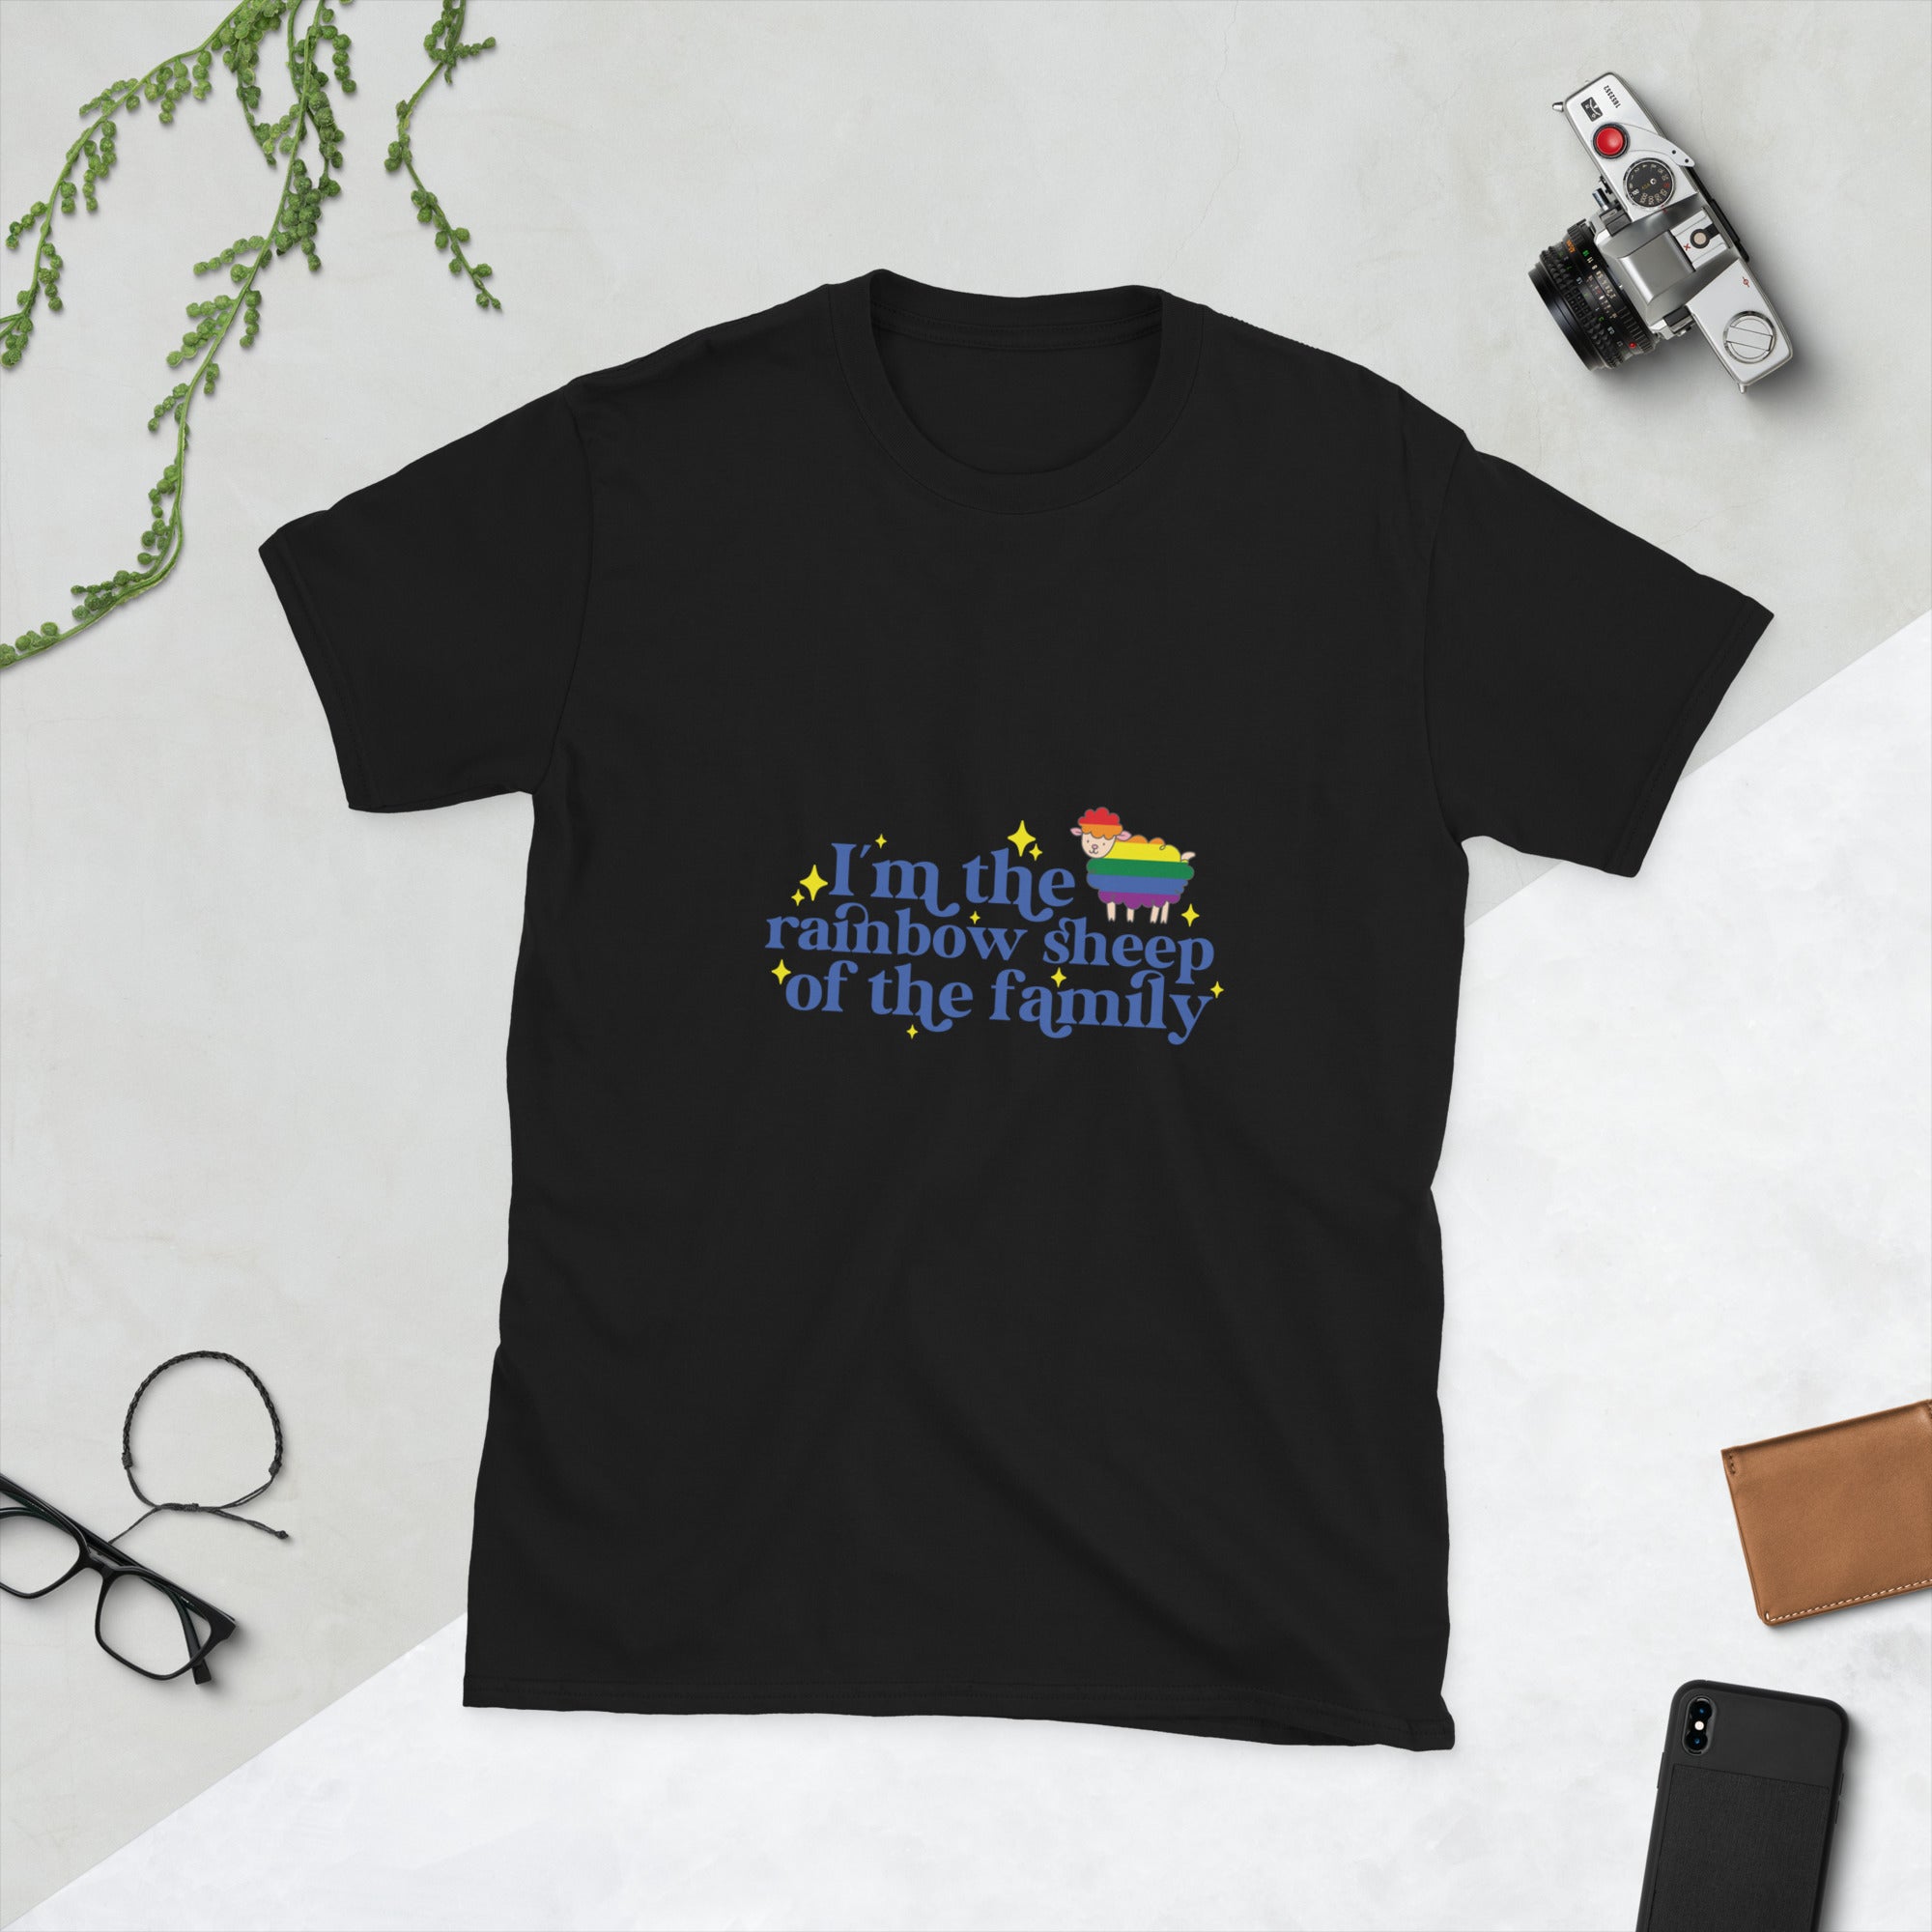 Short-Sleeve Unisex T-Shirt- I'm the rainbow sheep of the family